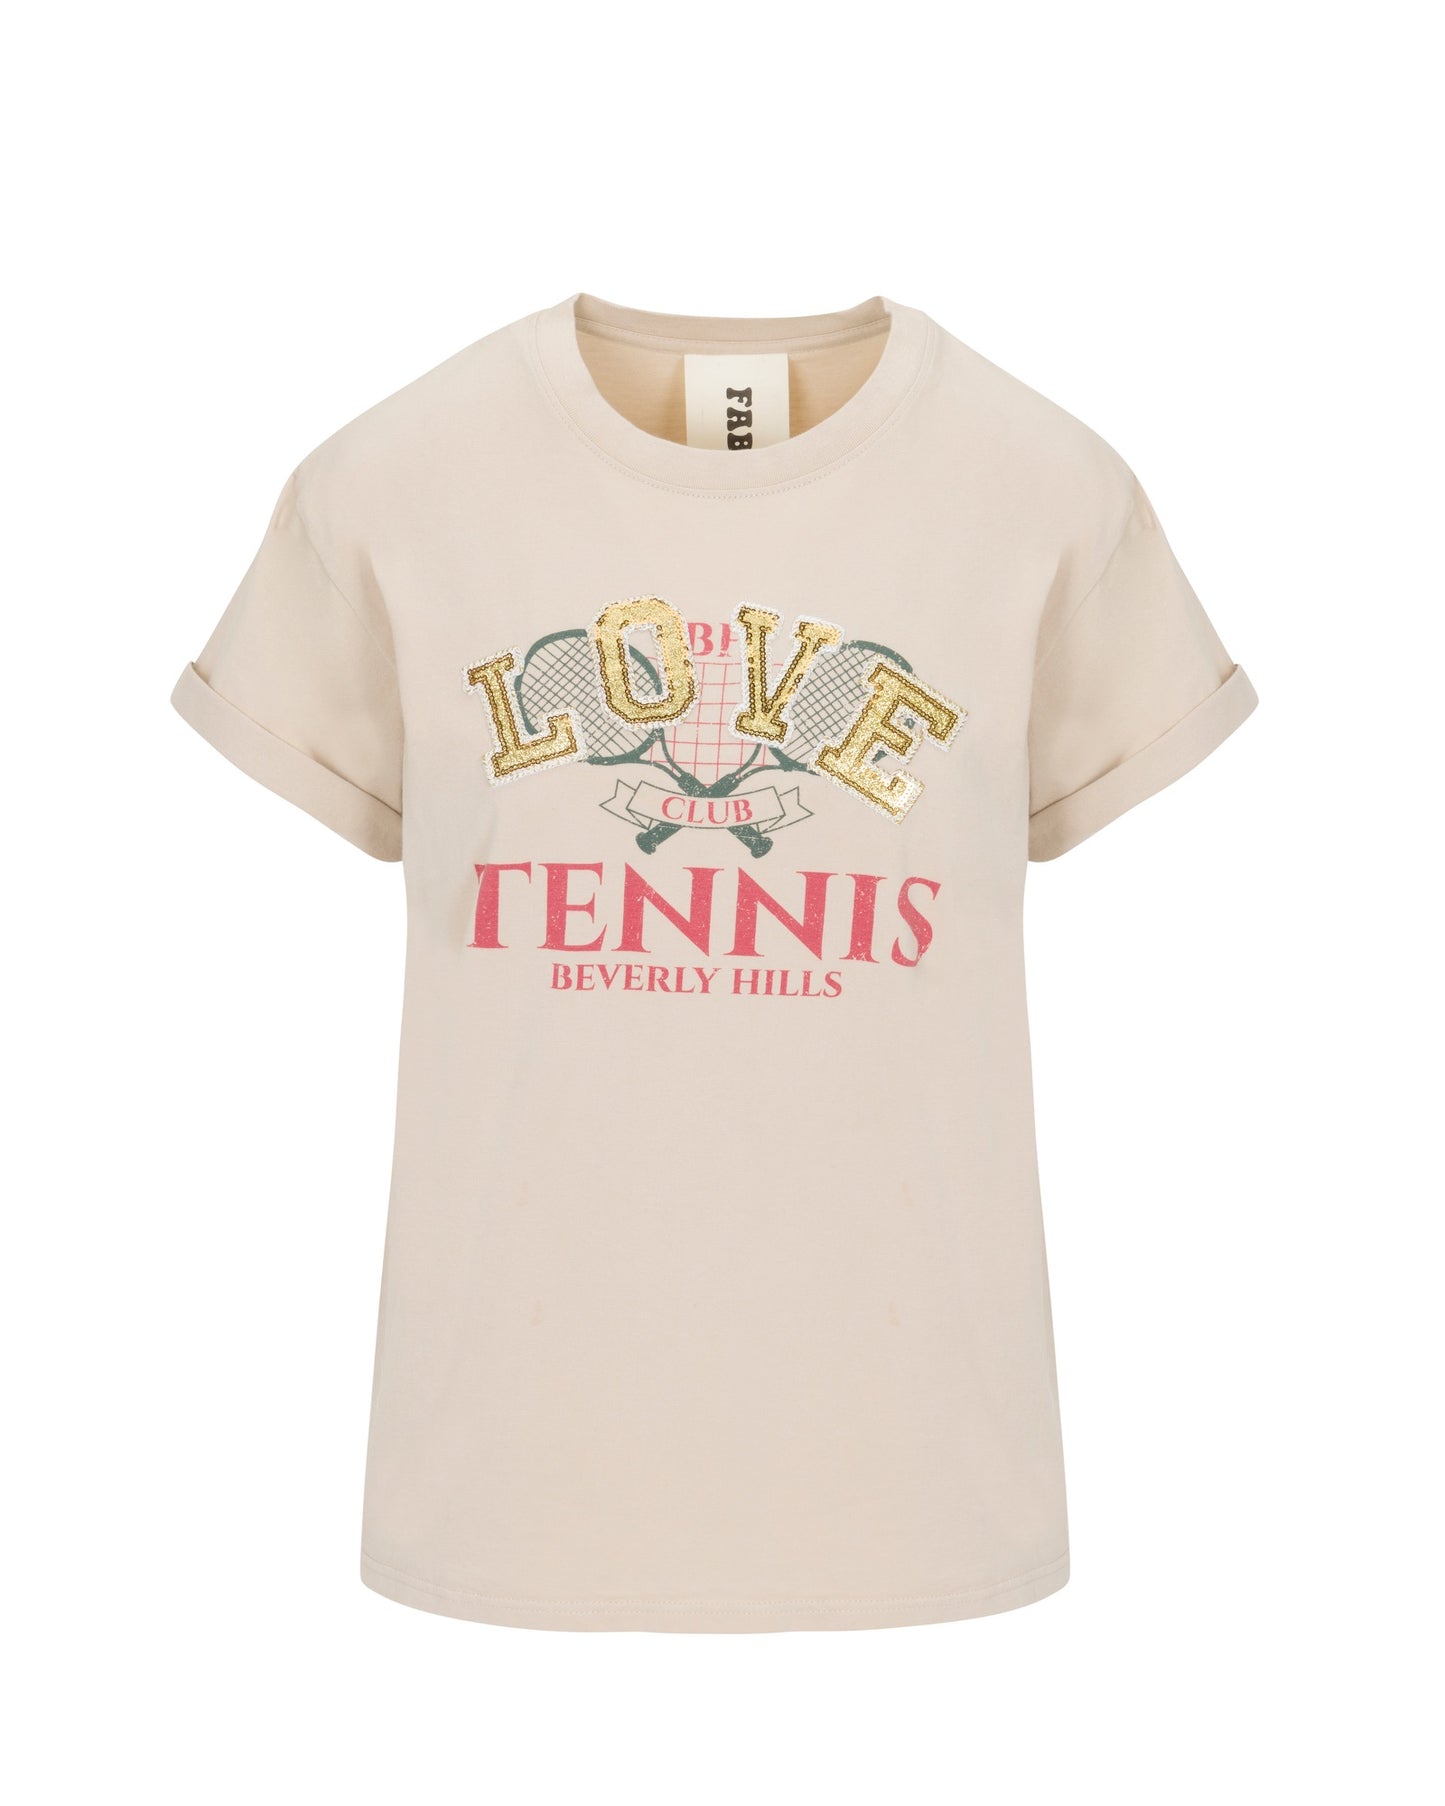 I Love Tennis Vintage T-Shirt